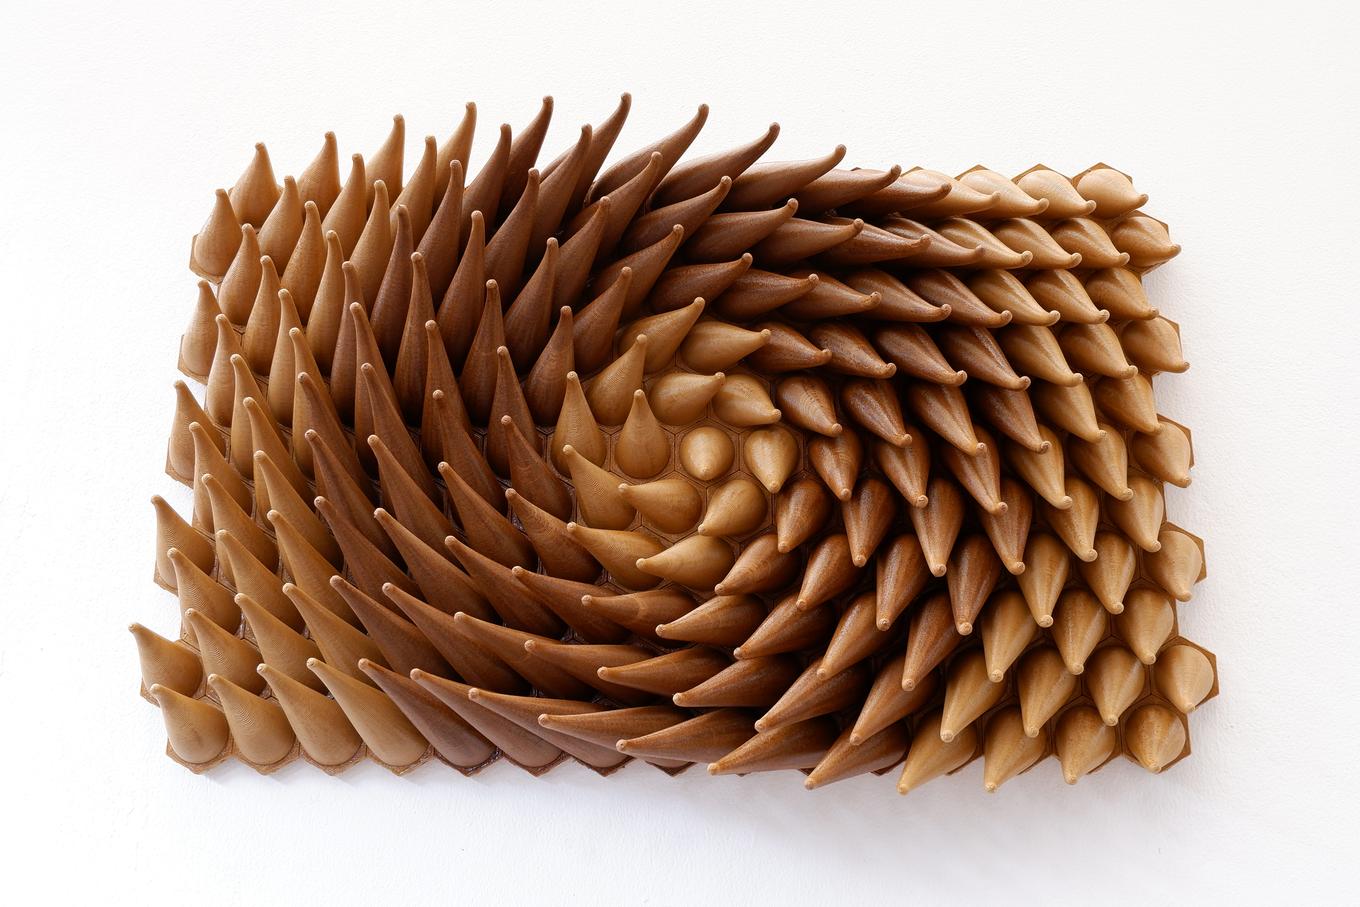 Twisted Tentacles | Herschel Shapiro | Abstract Wooden Wall Sculpture 